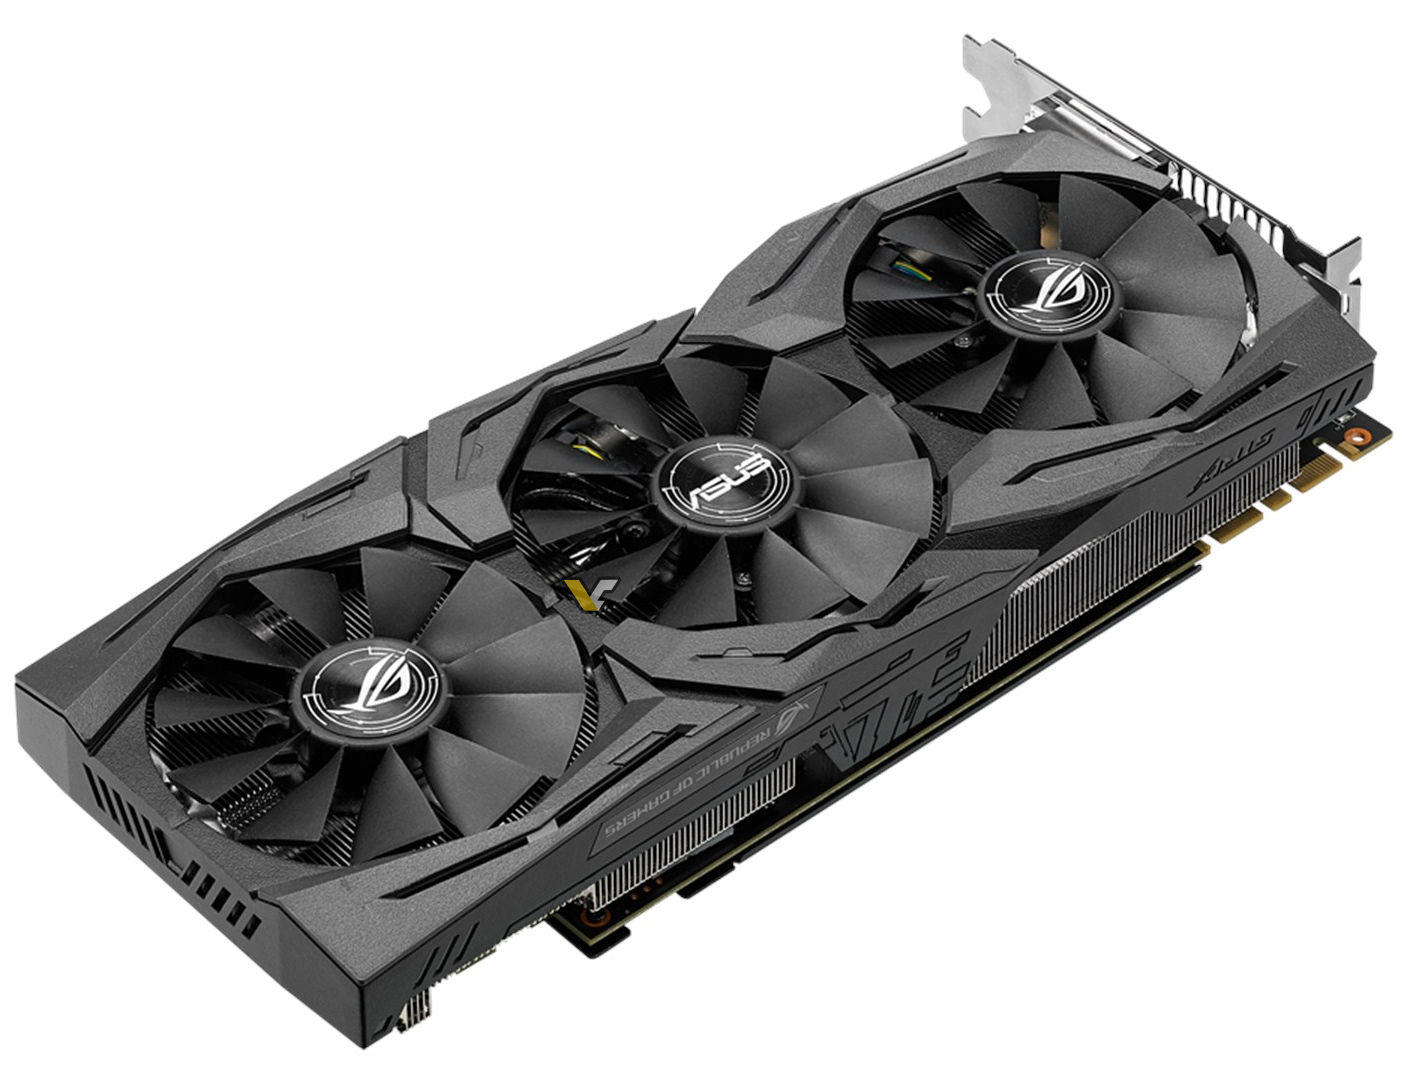 ASUS Announces ROG STRIX GeForce GTX 1070 - Custom PC Review